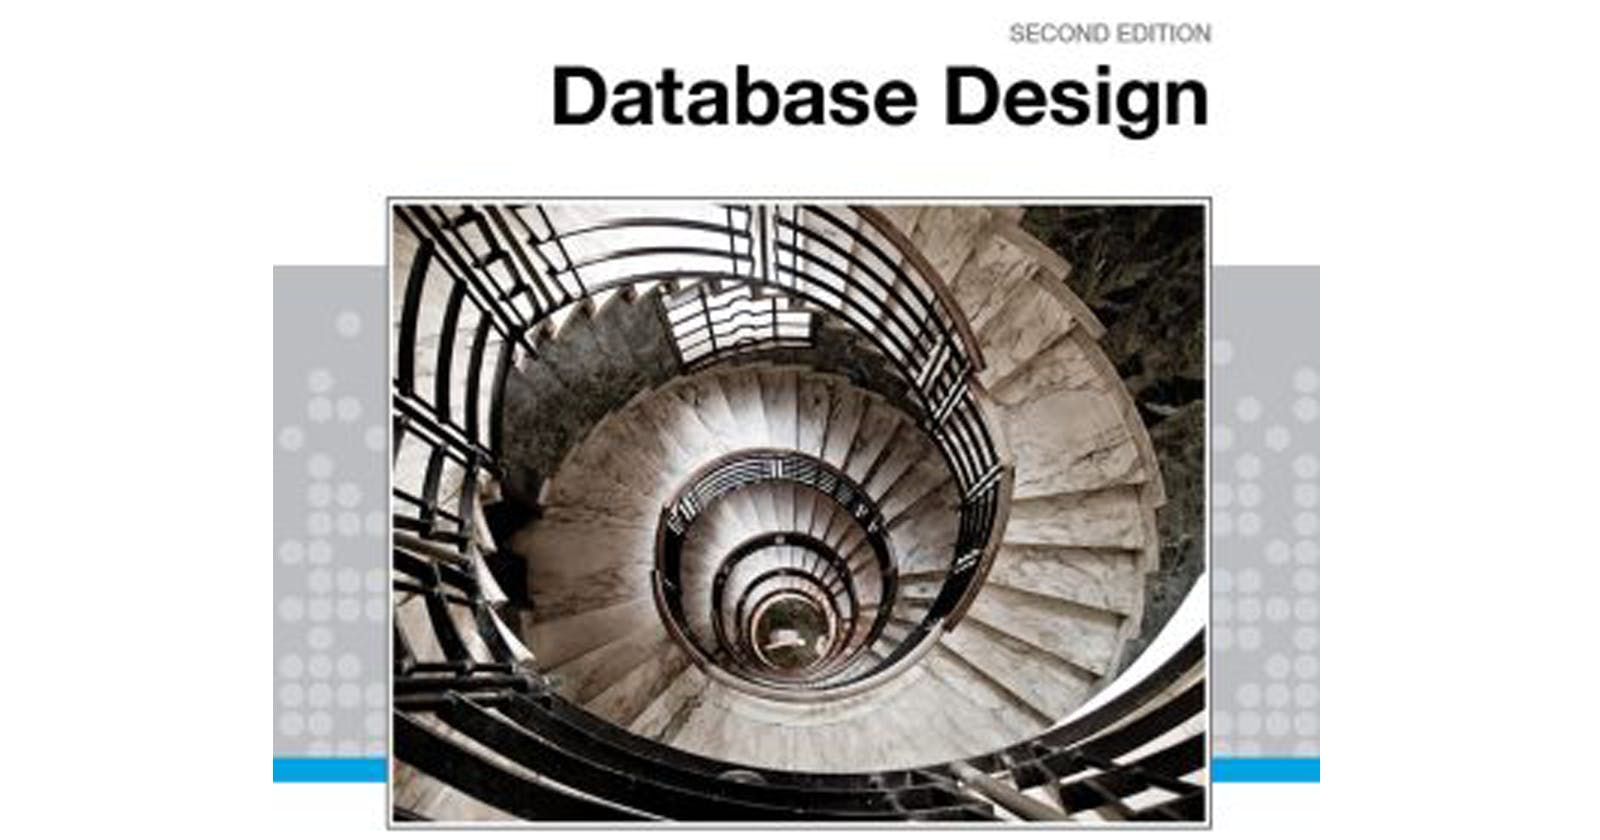 Database Design – 2nd Edition